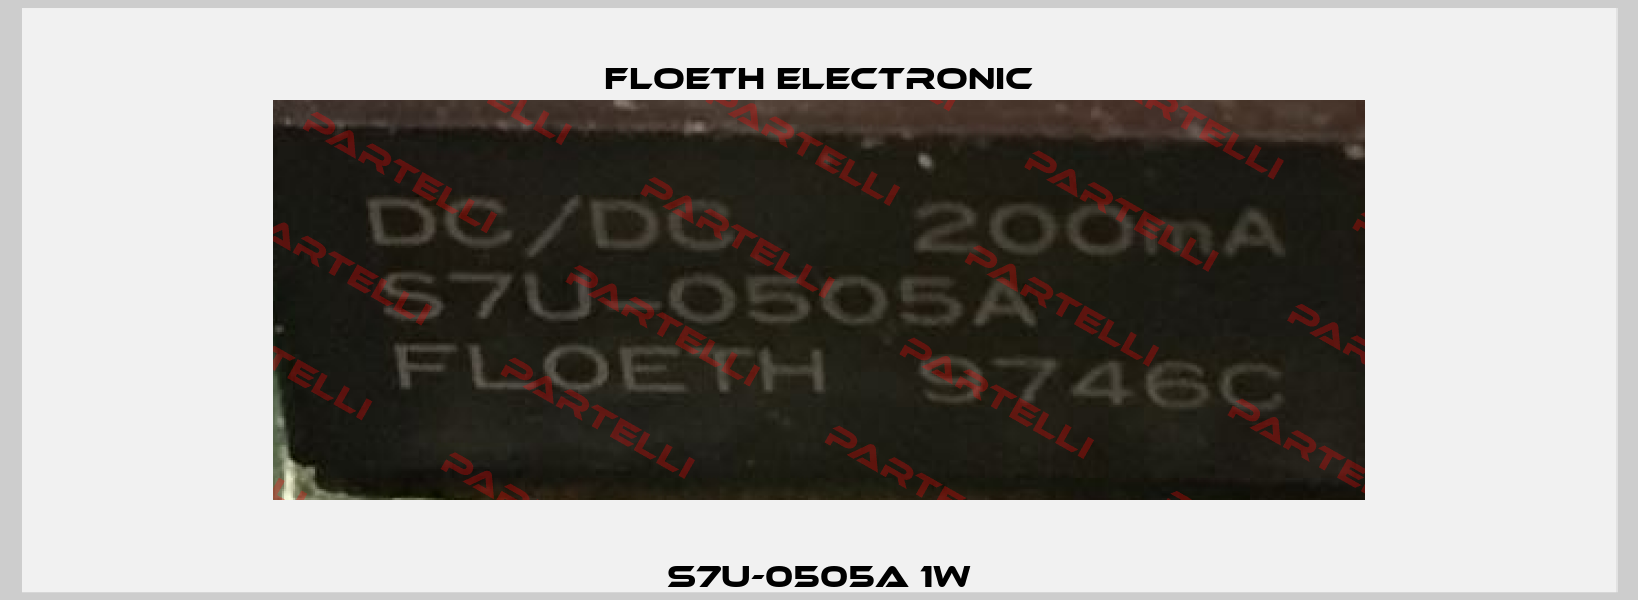 S7U-0505A 1W Floeth Electronic